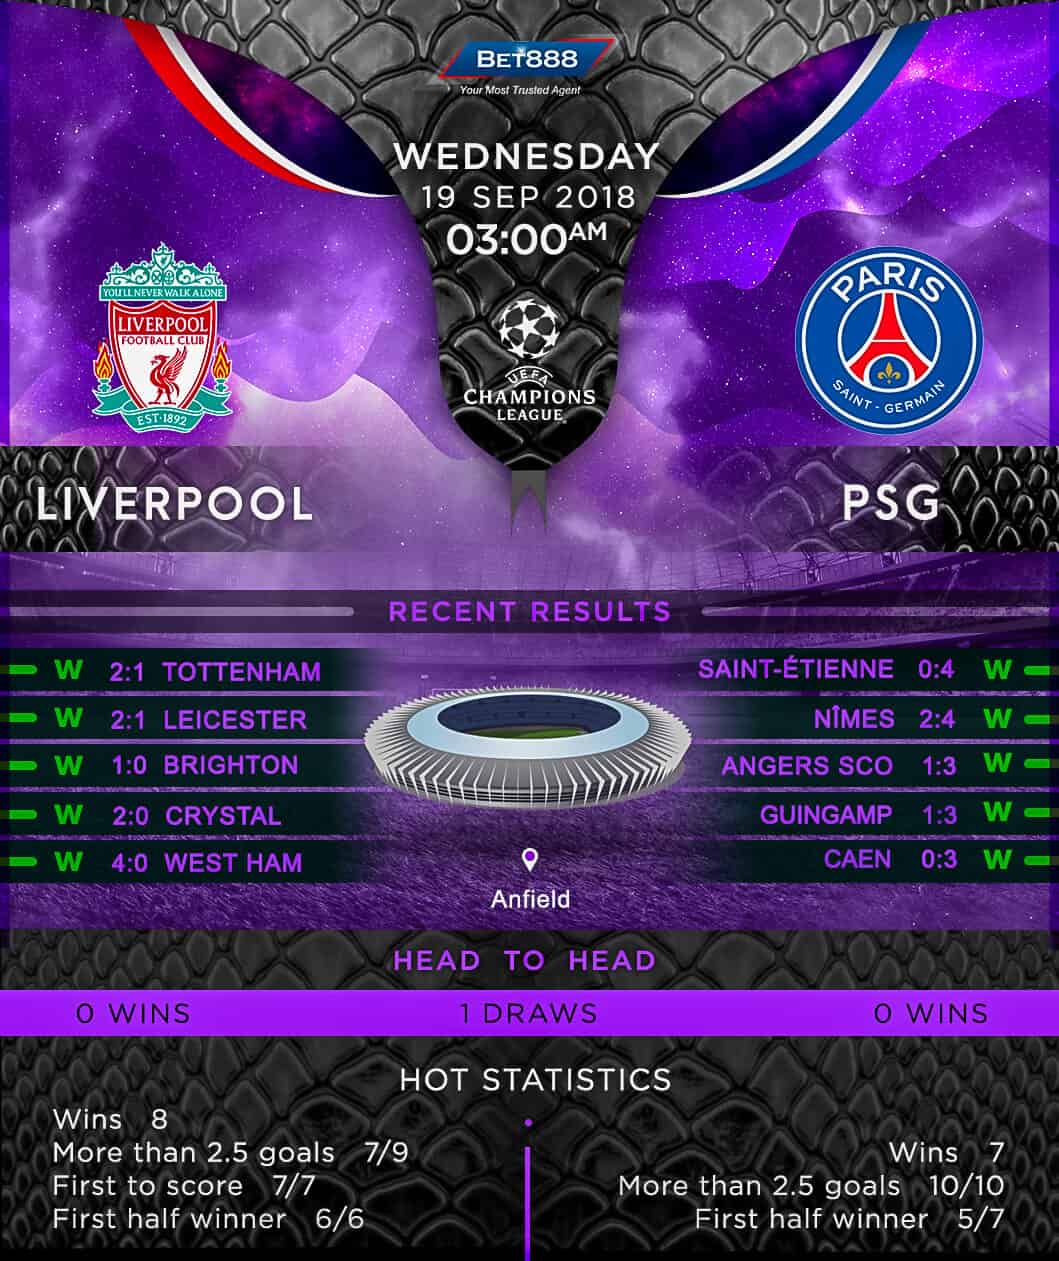 Liverpool vs Paris Saint-Germain 19/09/18